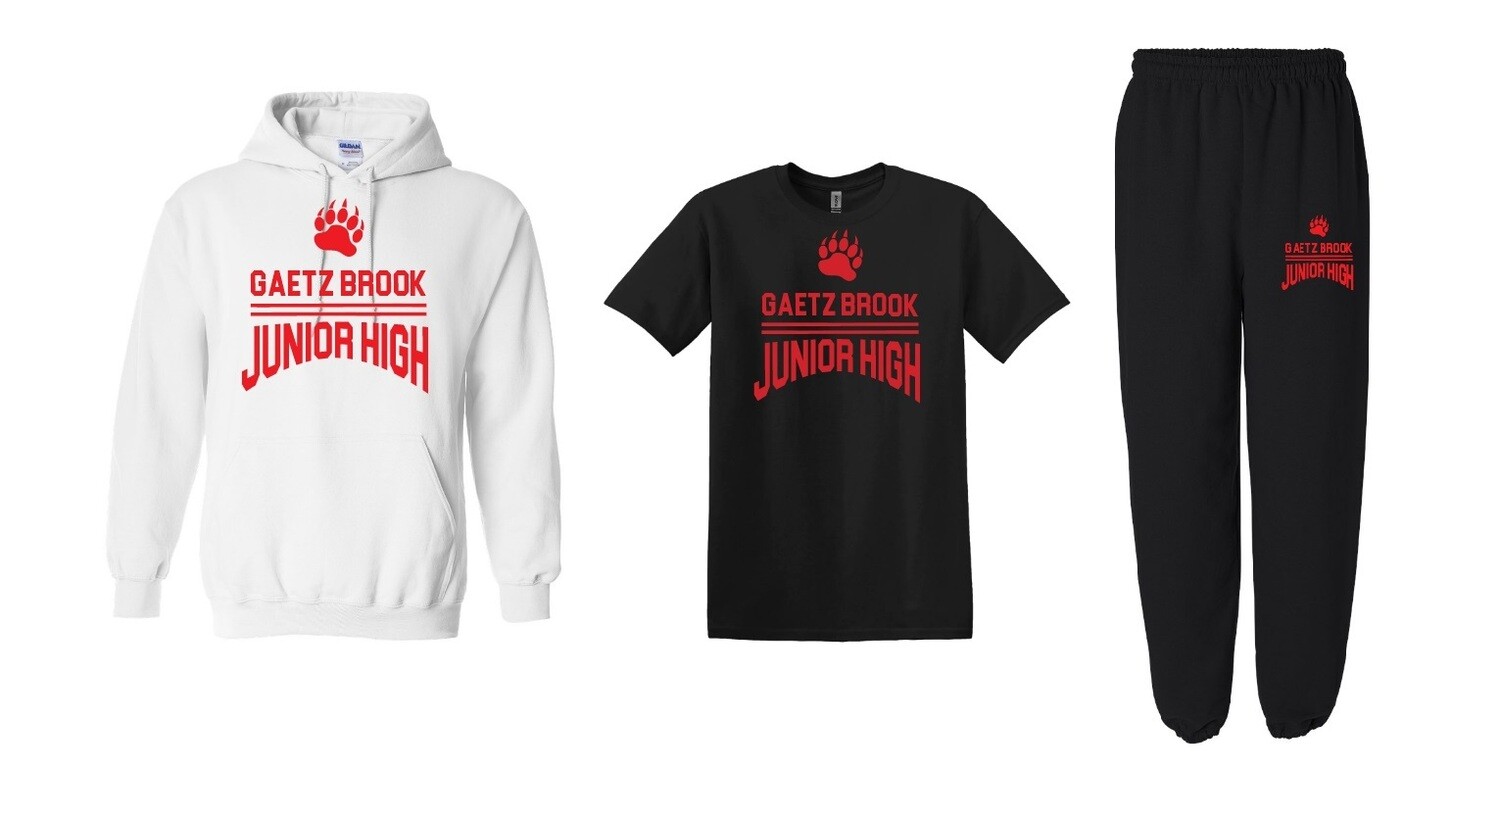 Gaetz Brook Junior High - Gaetz Brook Junior High Bundle (Hoodie, Cotton T-Shirt & Sweatpants)